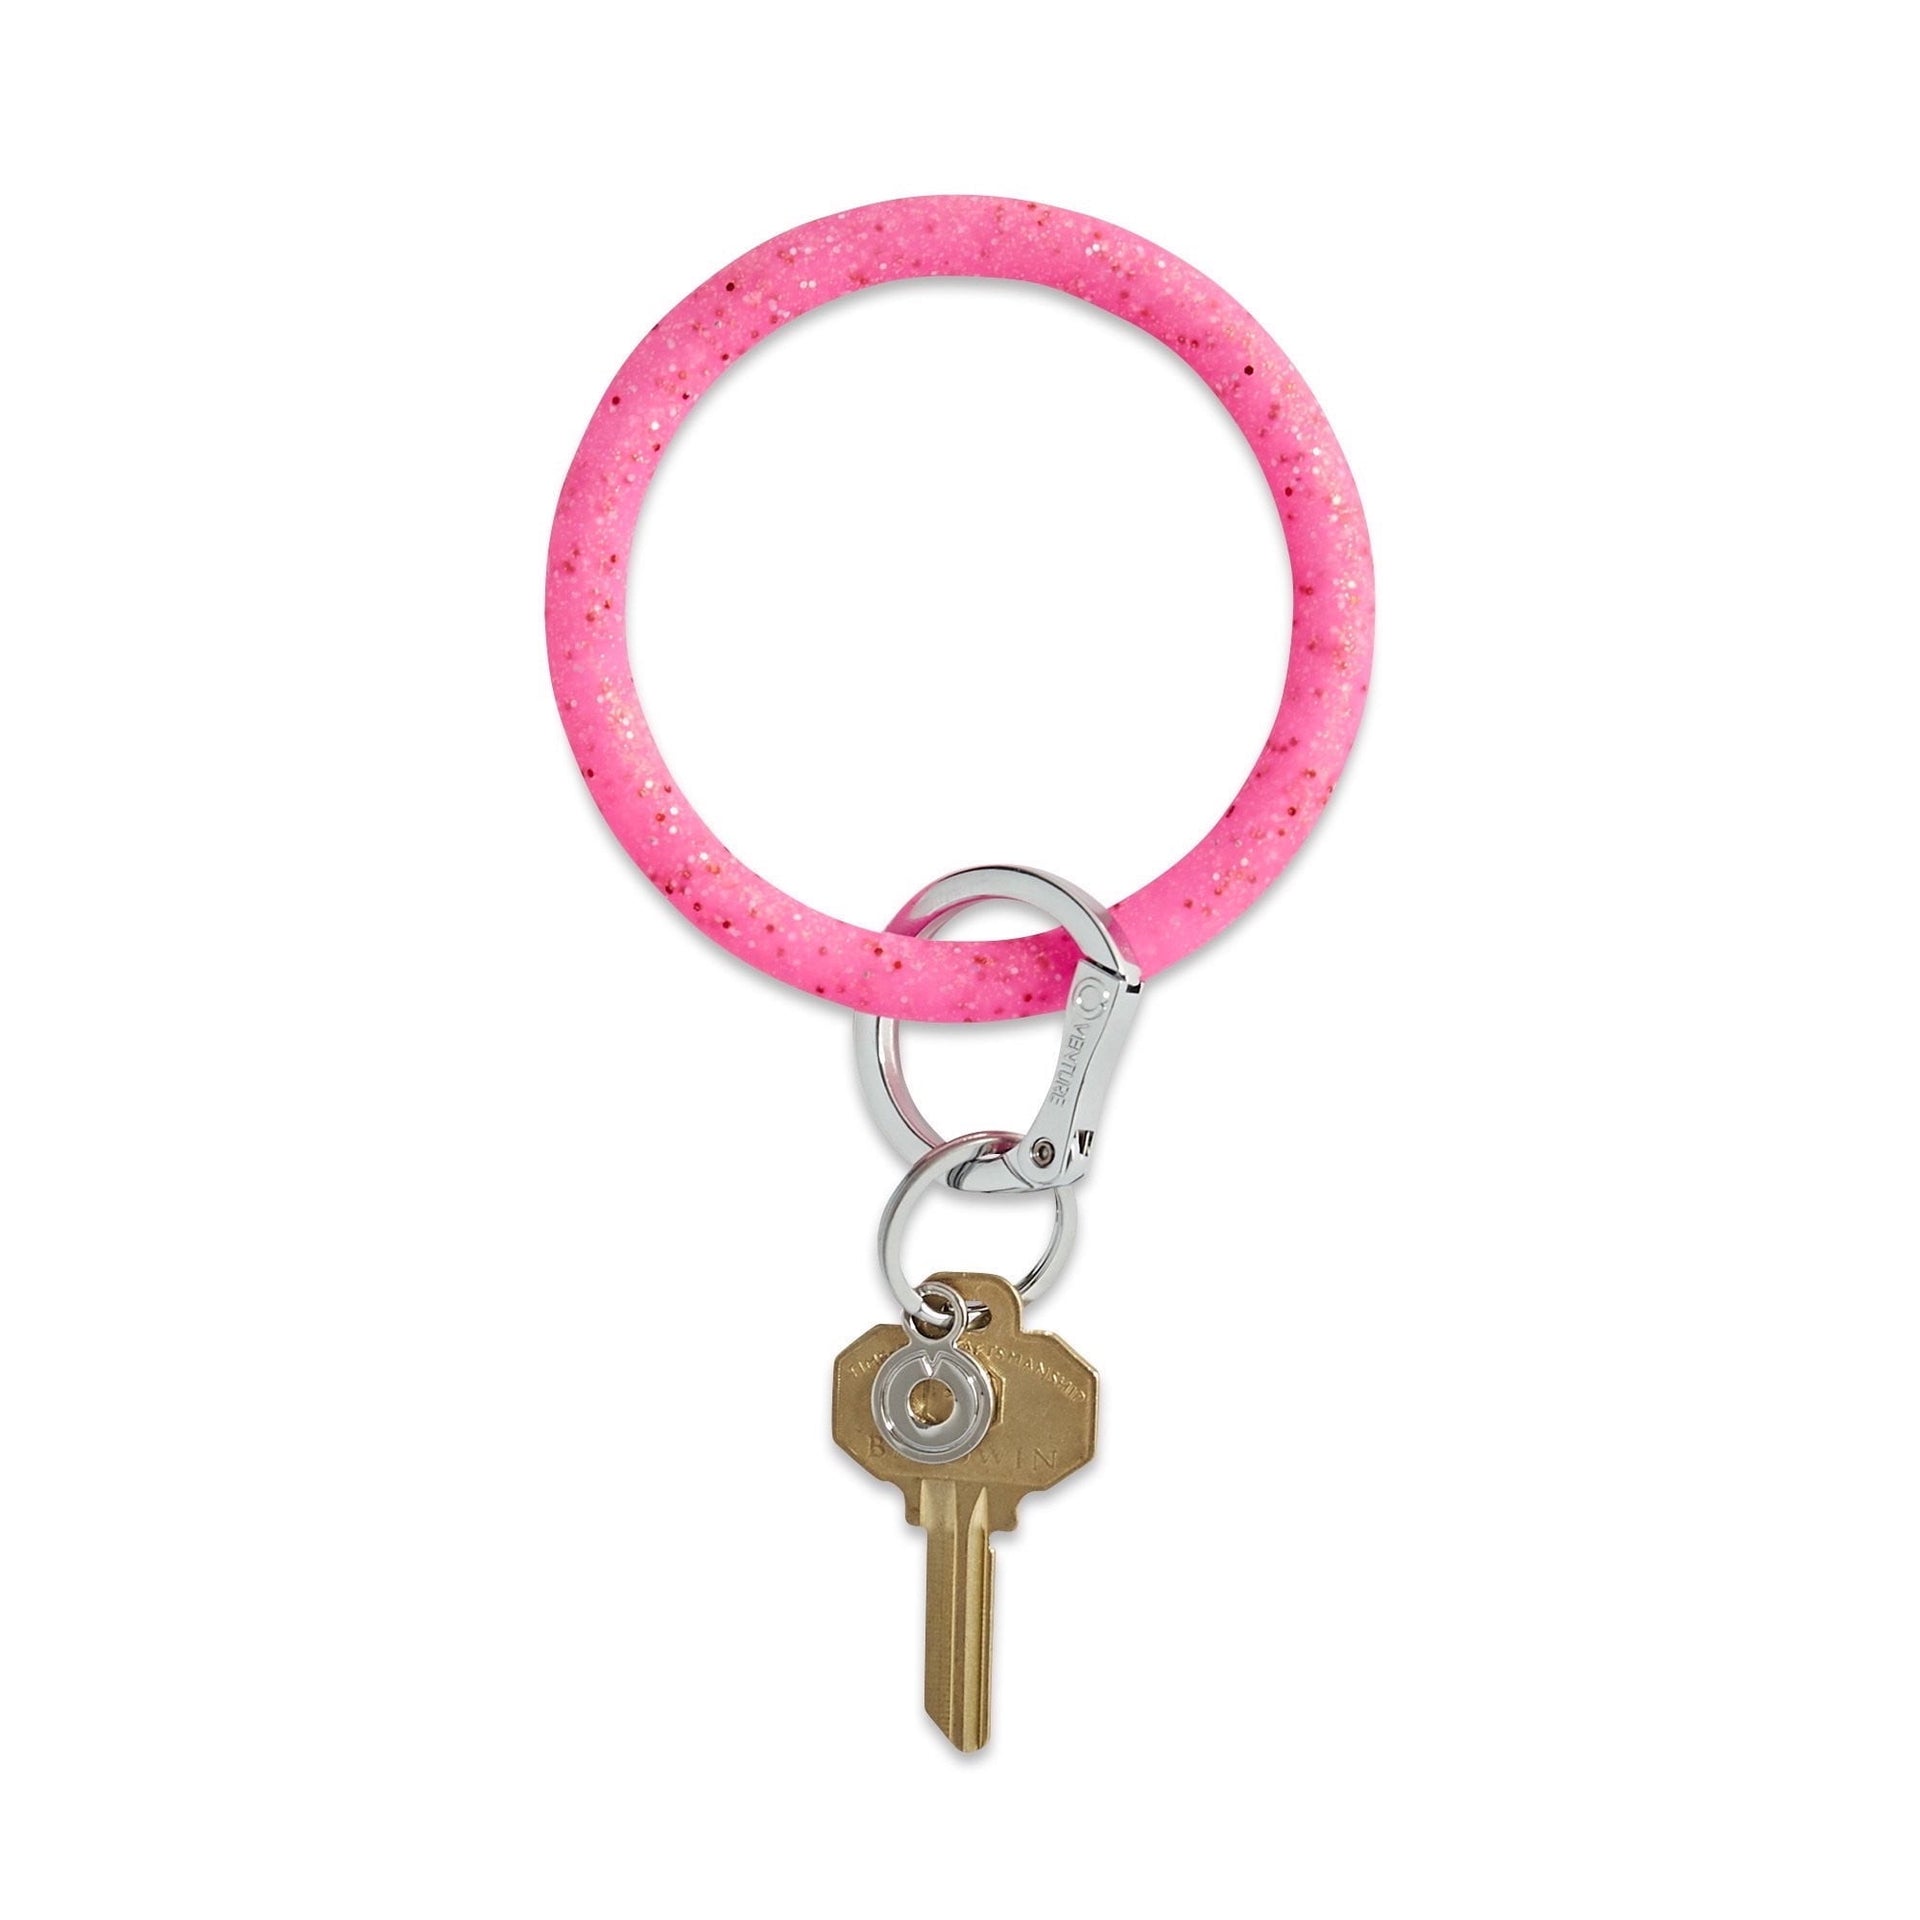 ARTIBETTER 4 Pcs Silicone Bracelet Keychain o Ring Keychain